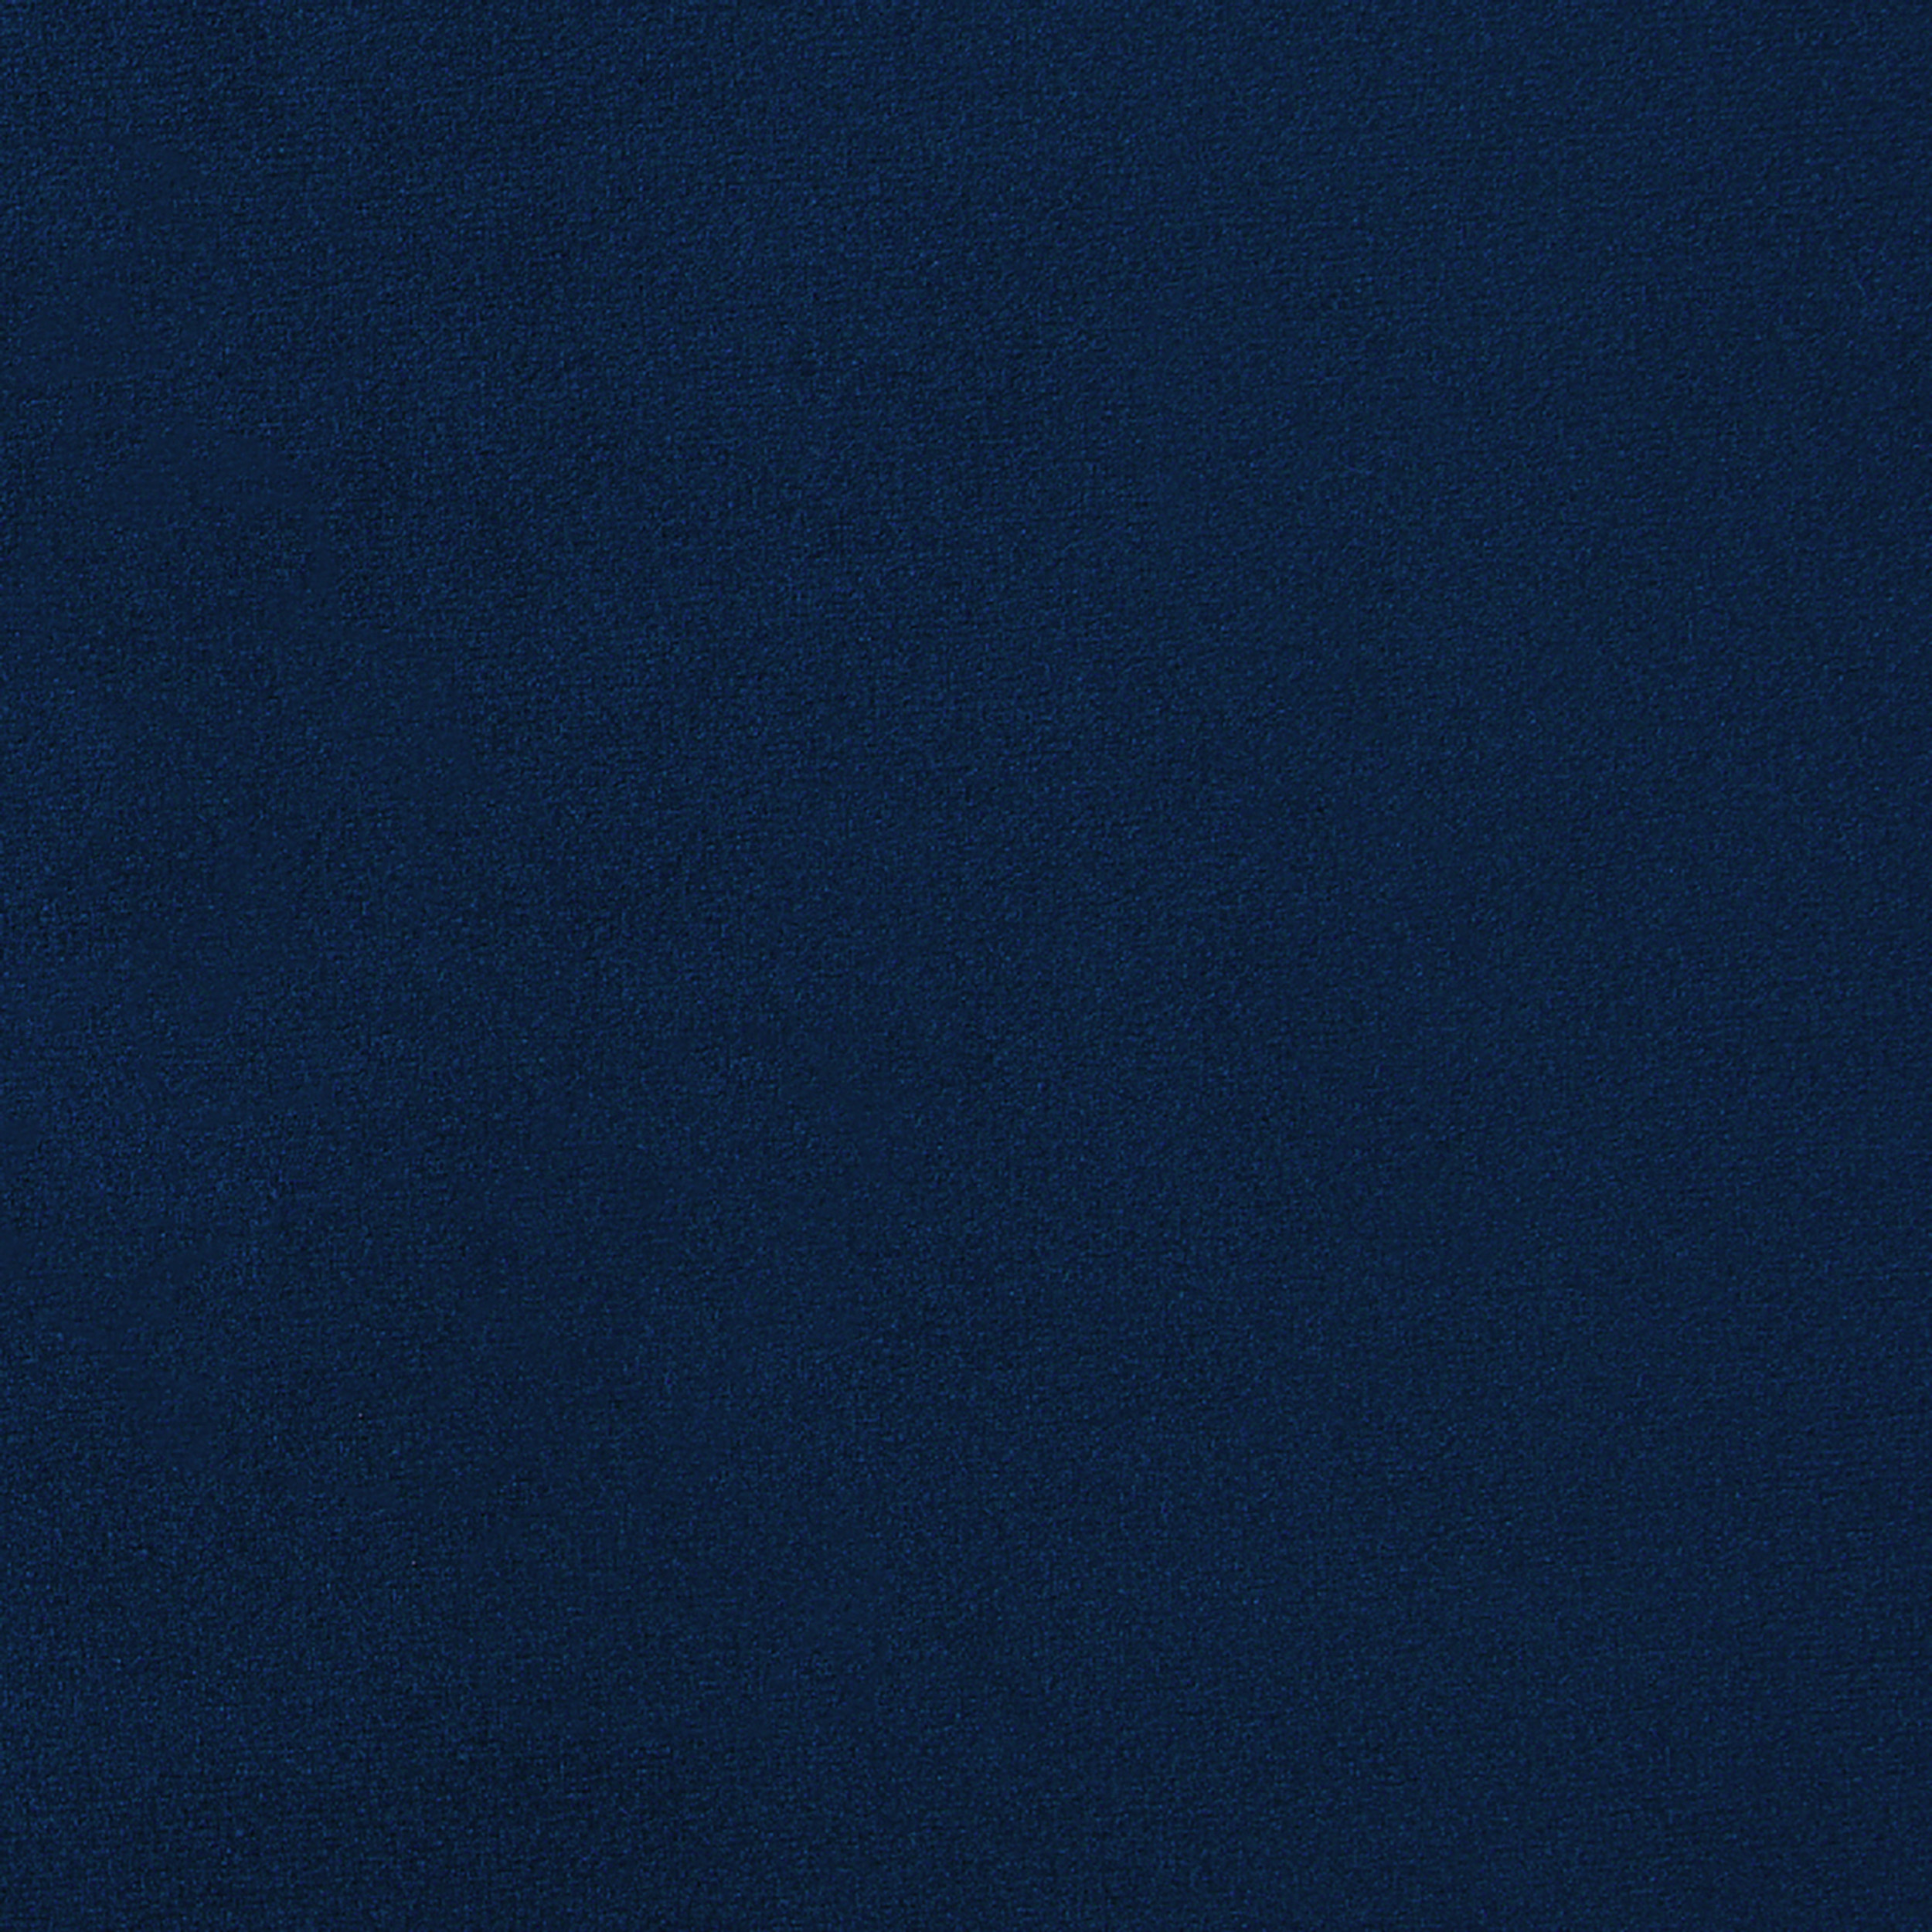 Jennifer Taylor 2x2 in. Navy Blue Velvet Fabric Swatch Sample